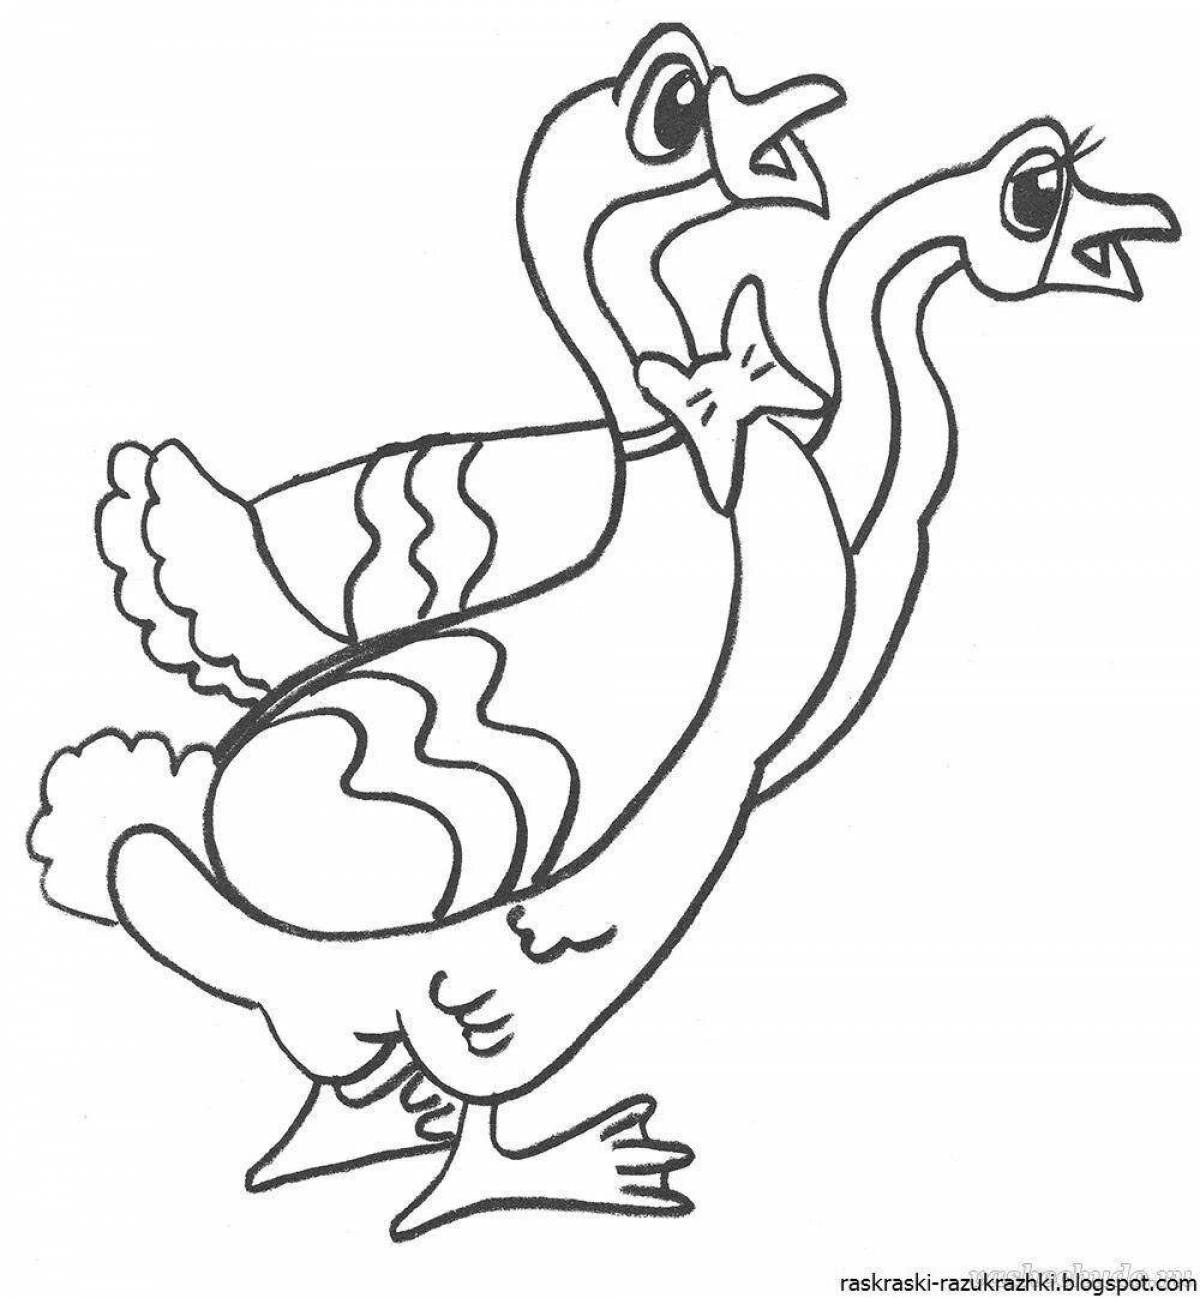 Joyful geese coloring page